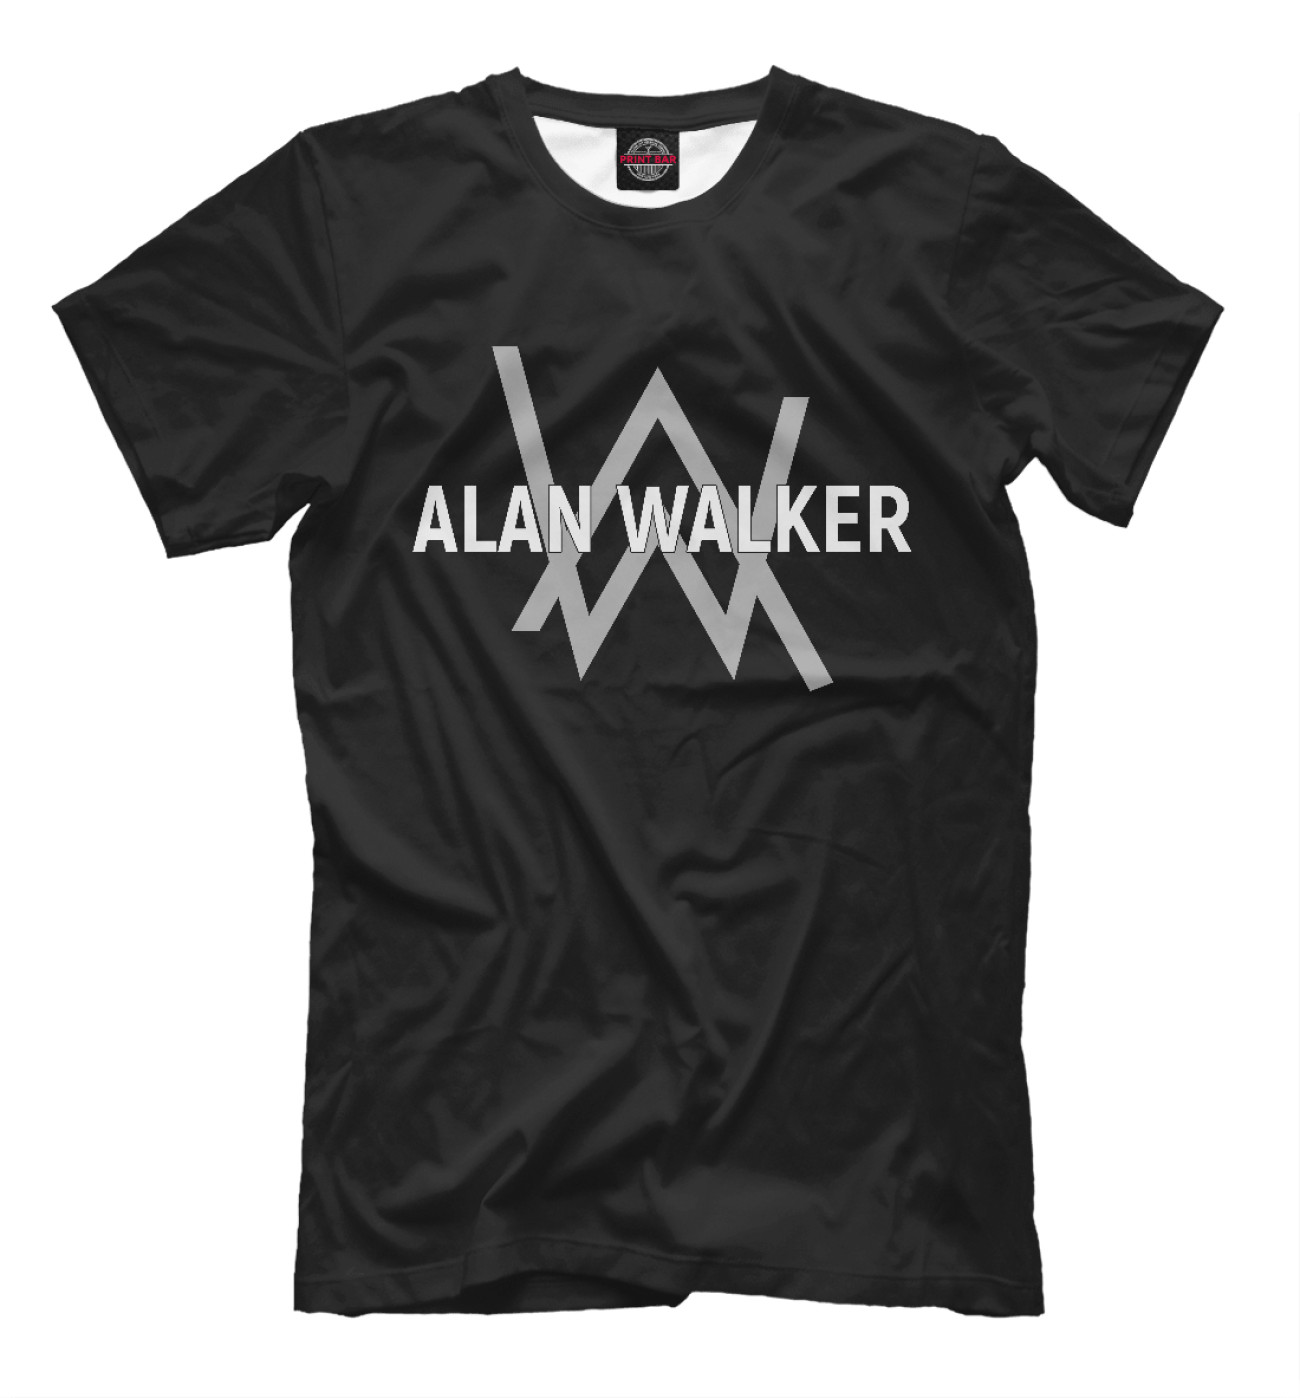 Мужская Футболка Alan Walker, артикул: ALW-917018-fut-2